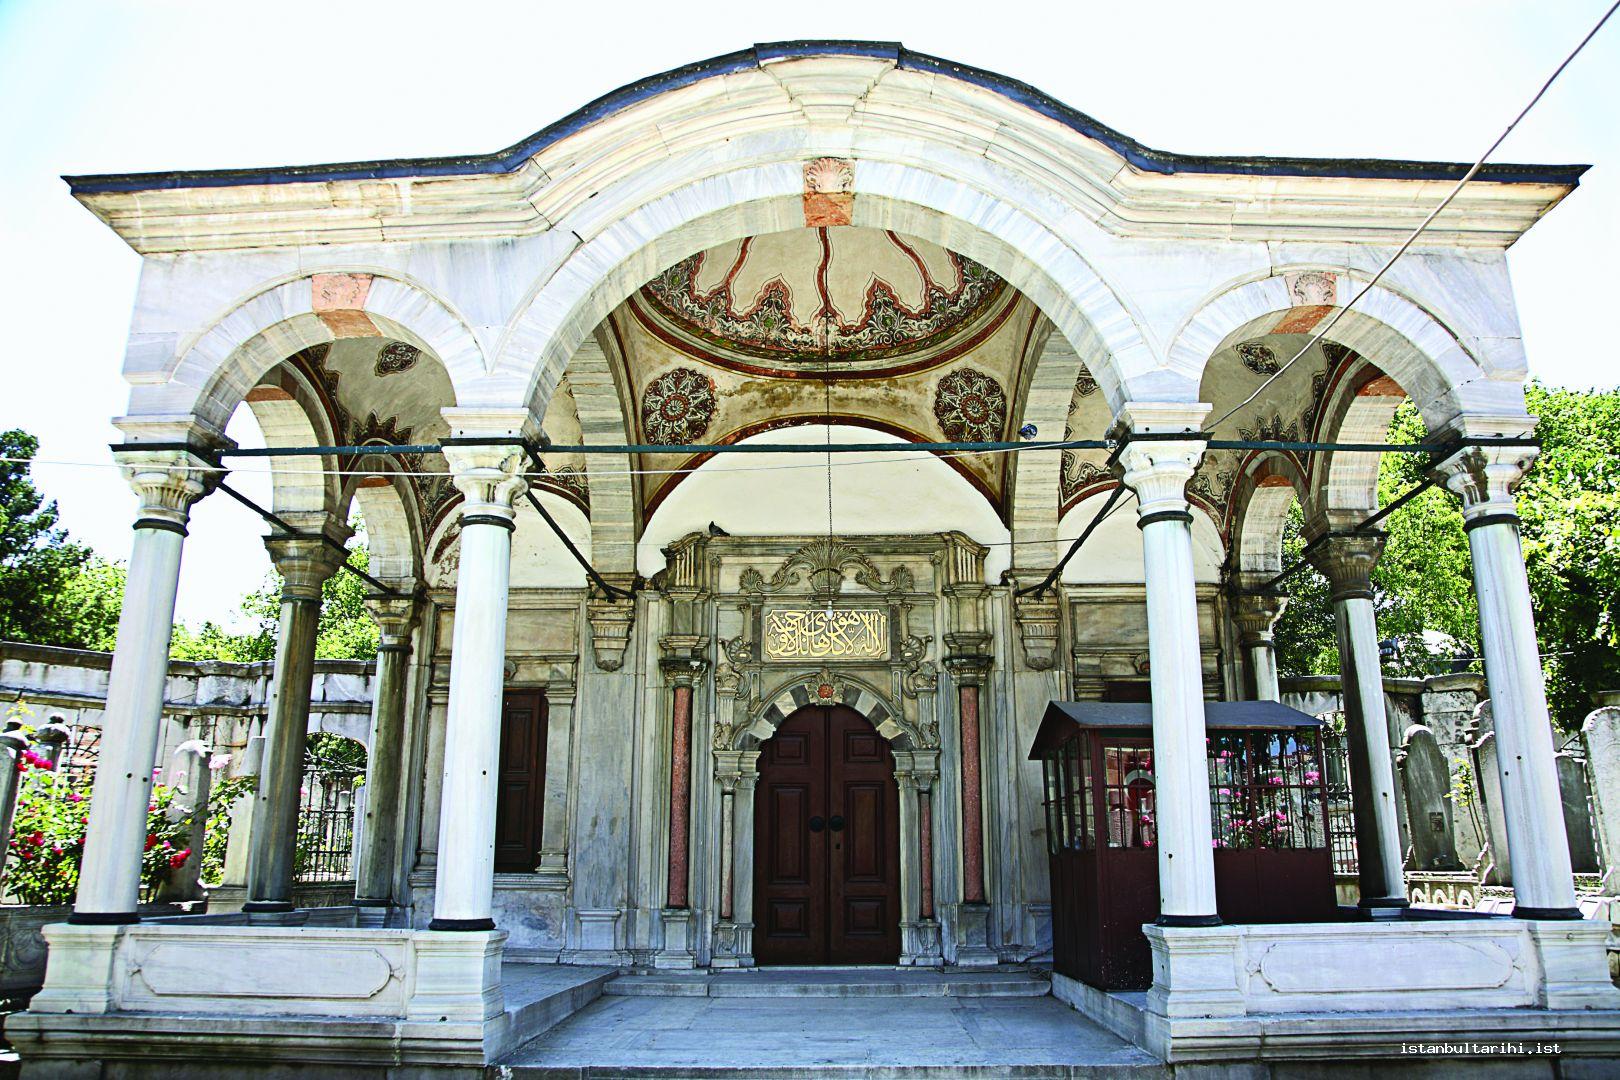 18- The tomb of Nakşidil Valide Sultan